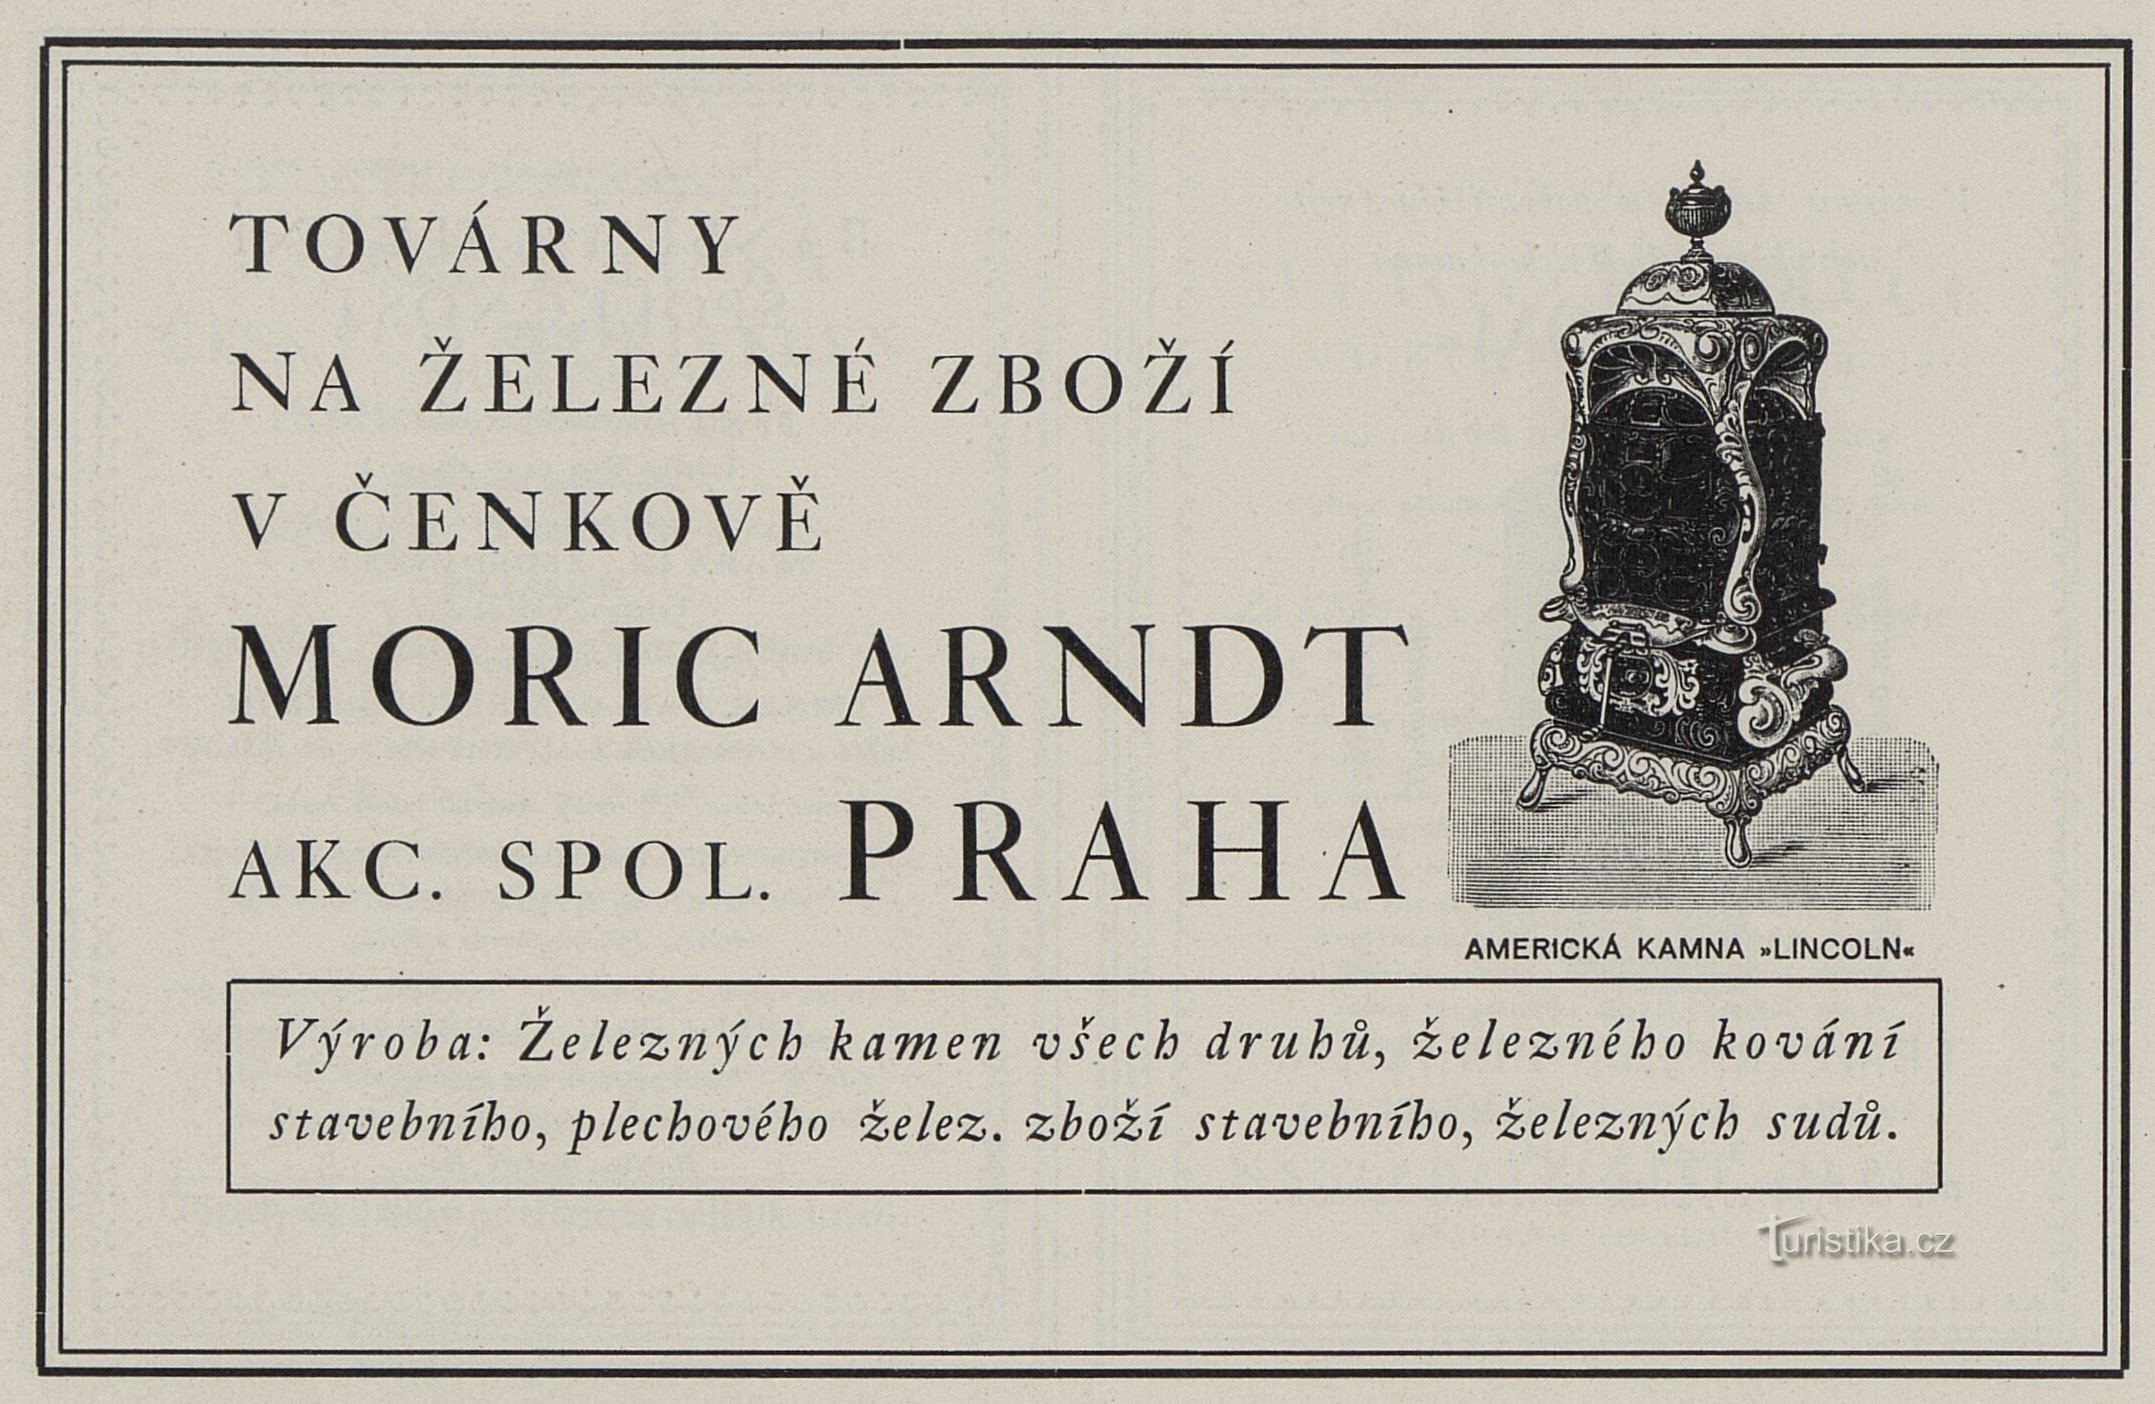 Un anuncio de 1925 de Moric Arndt